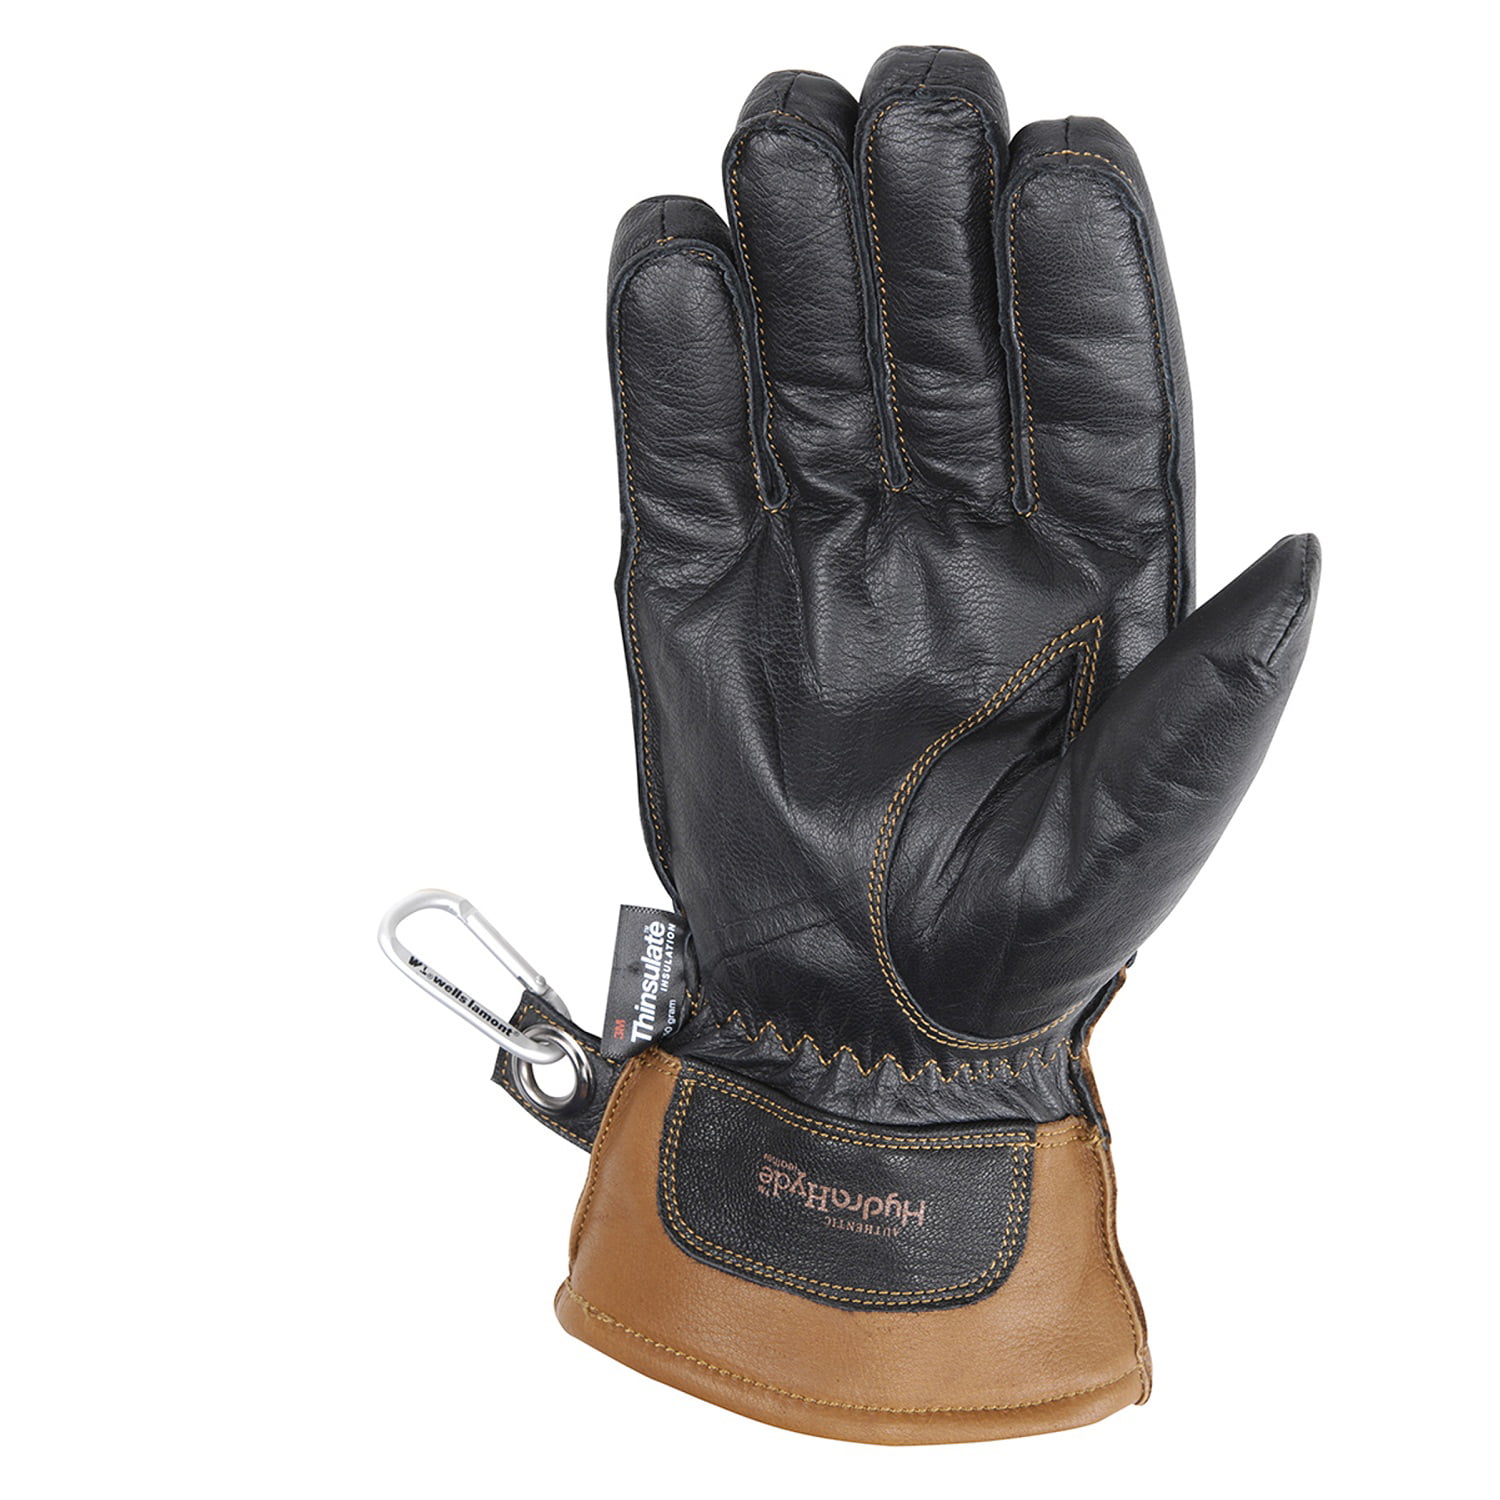 HeatKeep Thermal Lining Large Kinco 901-L Men's Pigskin Leather Ski Glove 